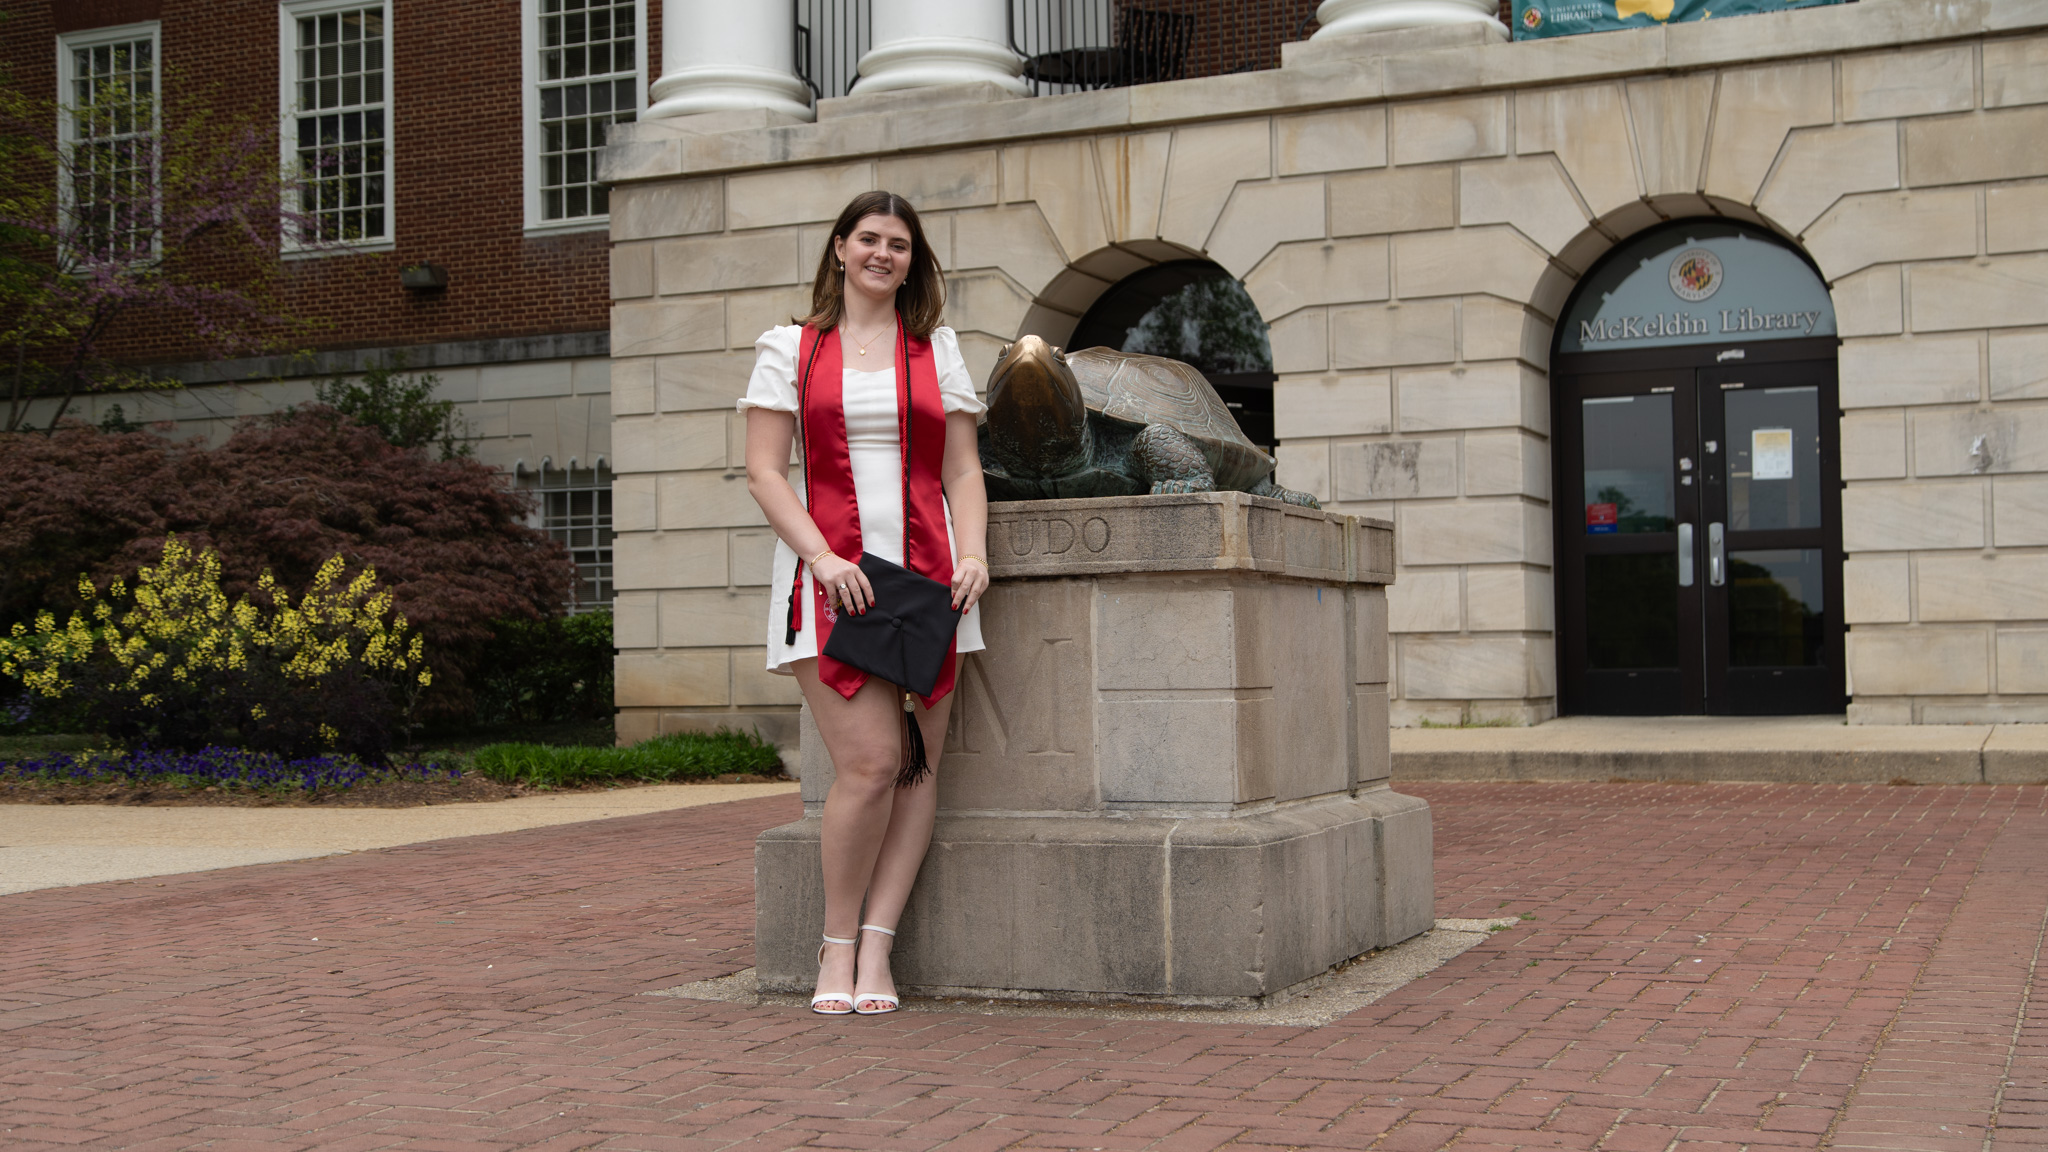 Catherine Frisch in graduation regalia standing next to Testudo statue